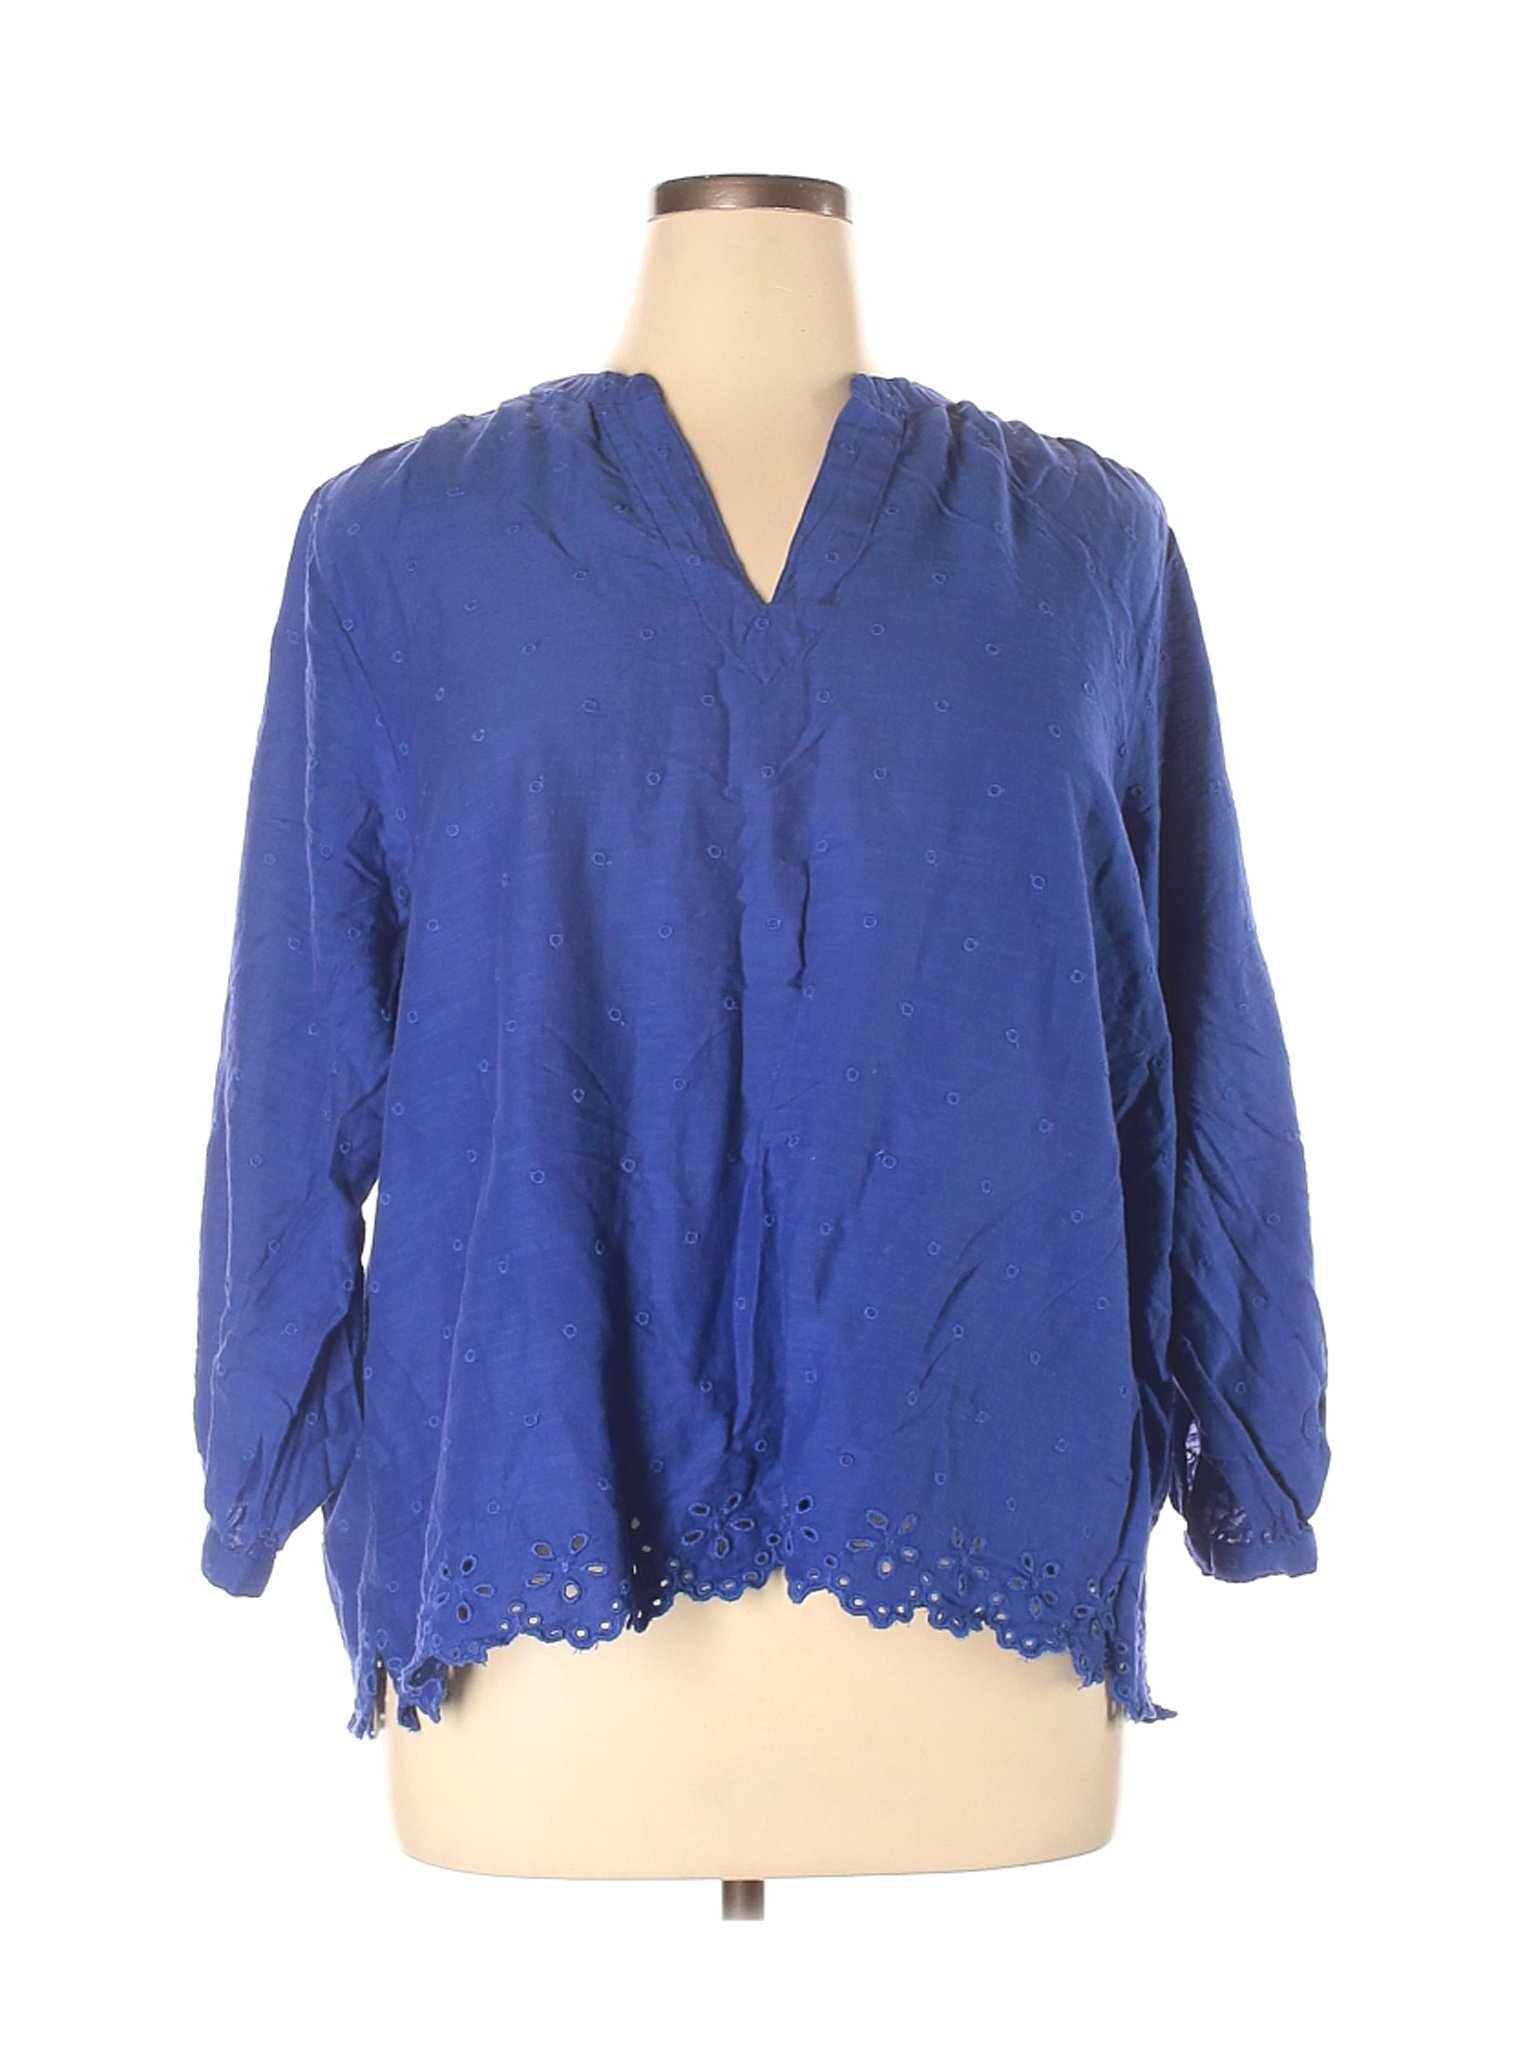 Old Navy Women Blue 3/4 Sleeve Blouse XL | eBay